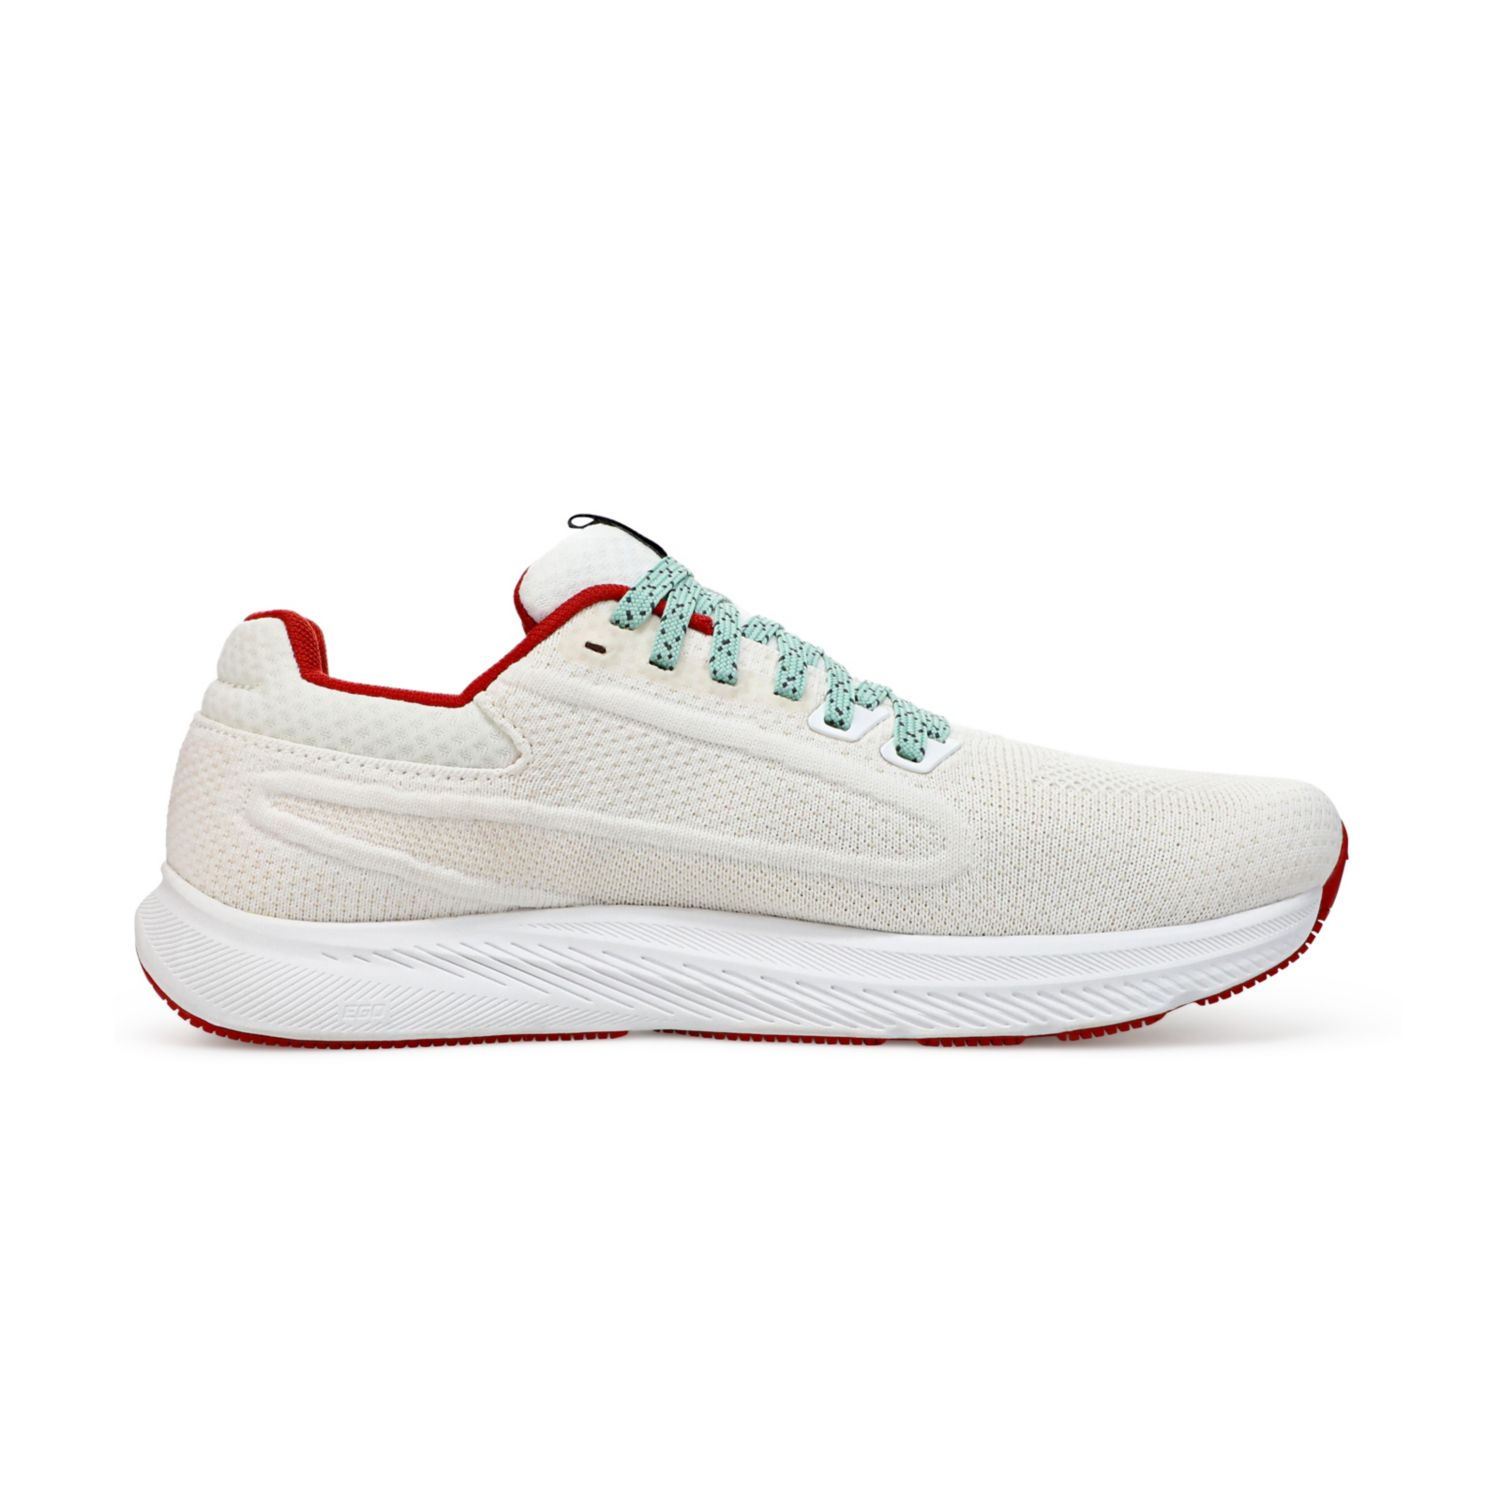 White Altra Escalante 3 Women's Walking Shoes | Ireland-31079489